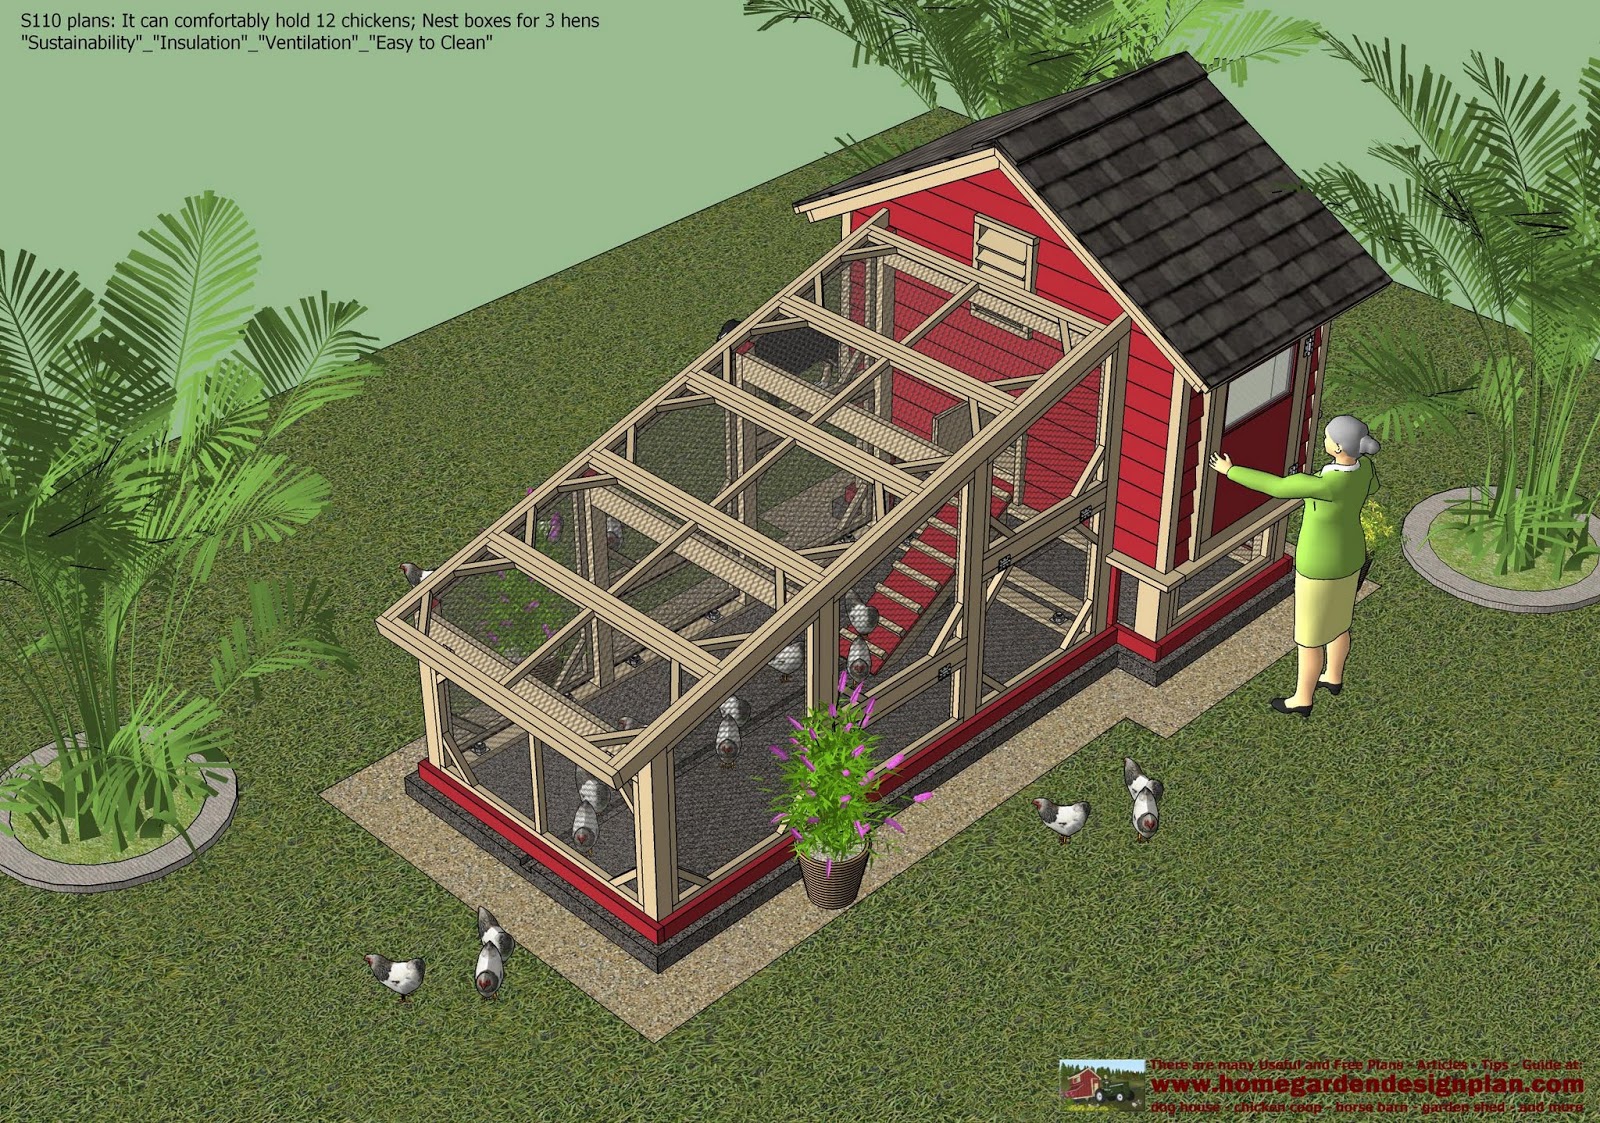 S110 - Chicken Coop Plans Construction - Chicken Coop Design - How To ...